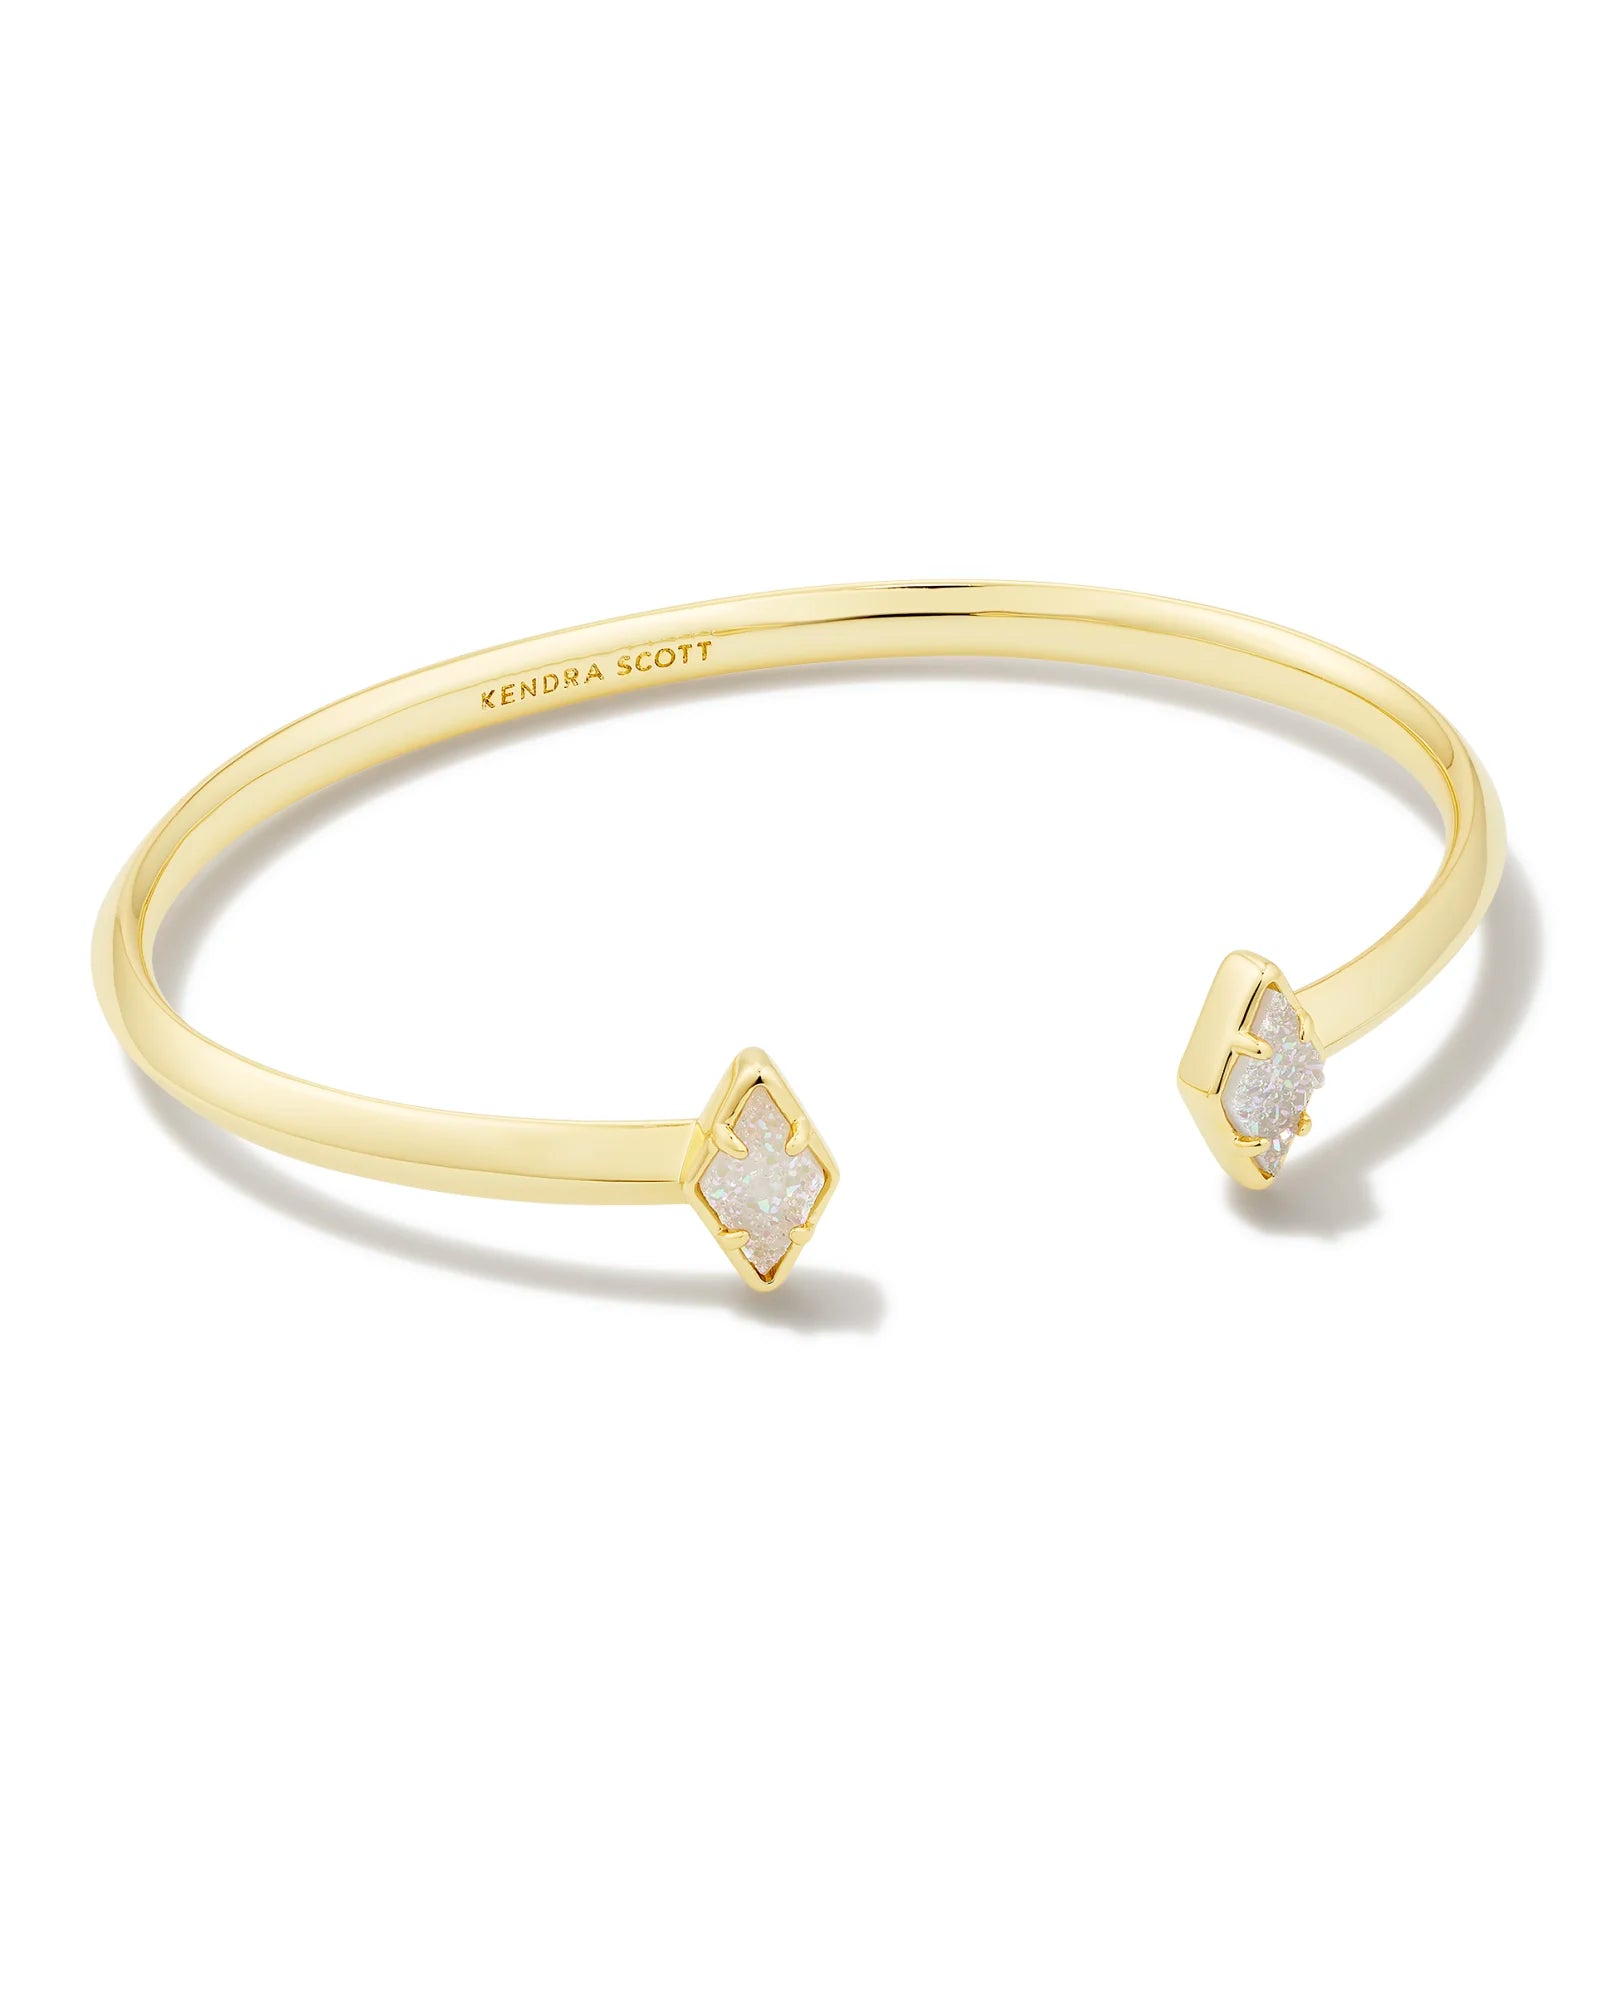 KENDRA SCOTT- Kinsley Gold Cuff Bracelet in Iridescent Drusy